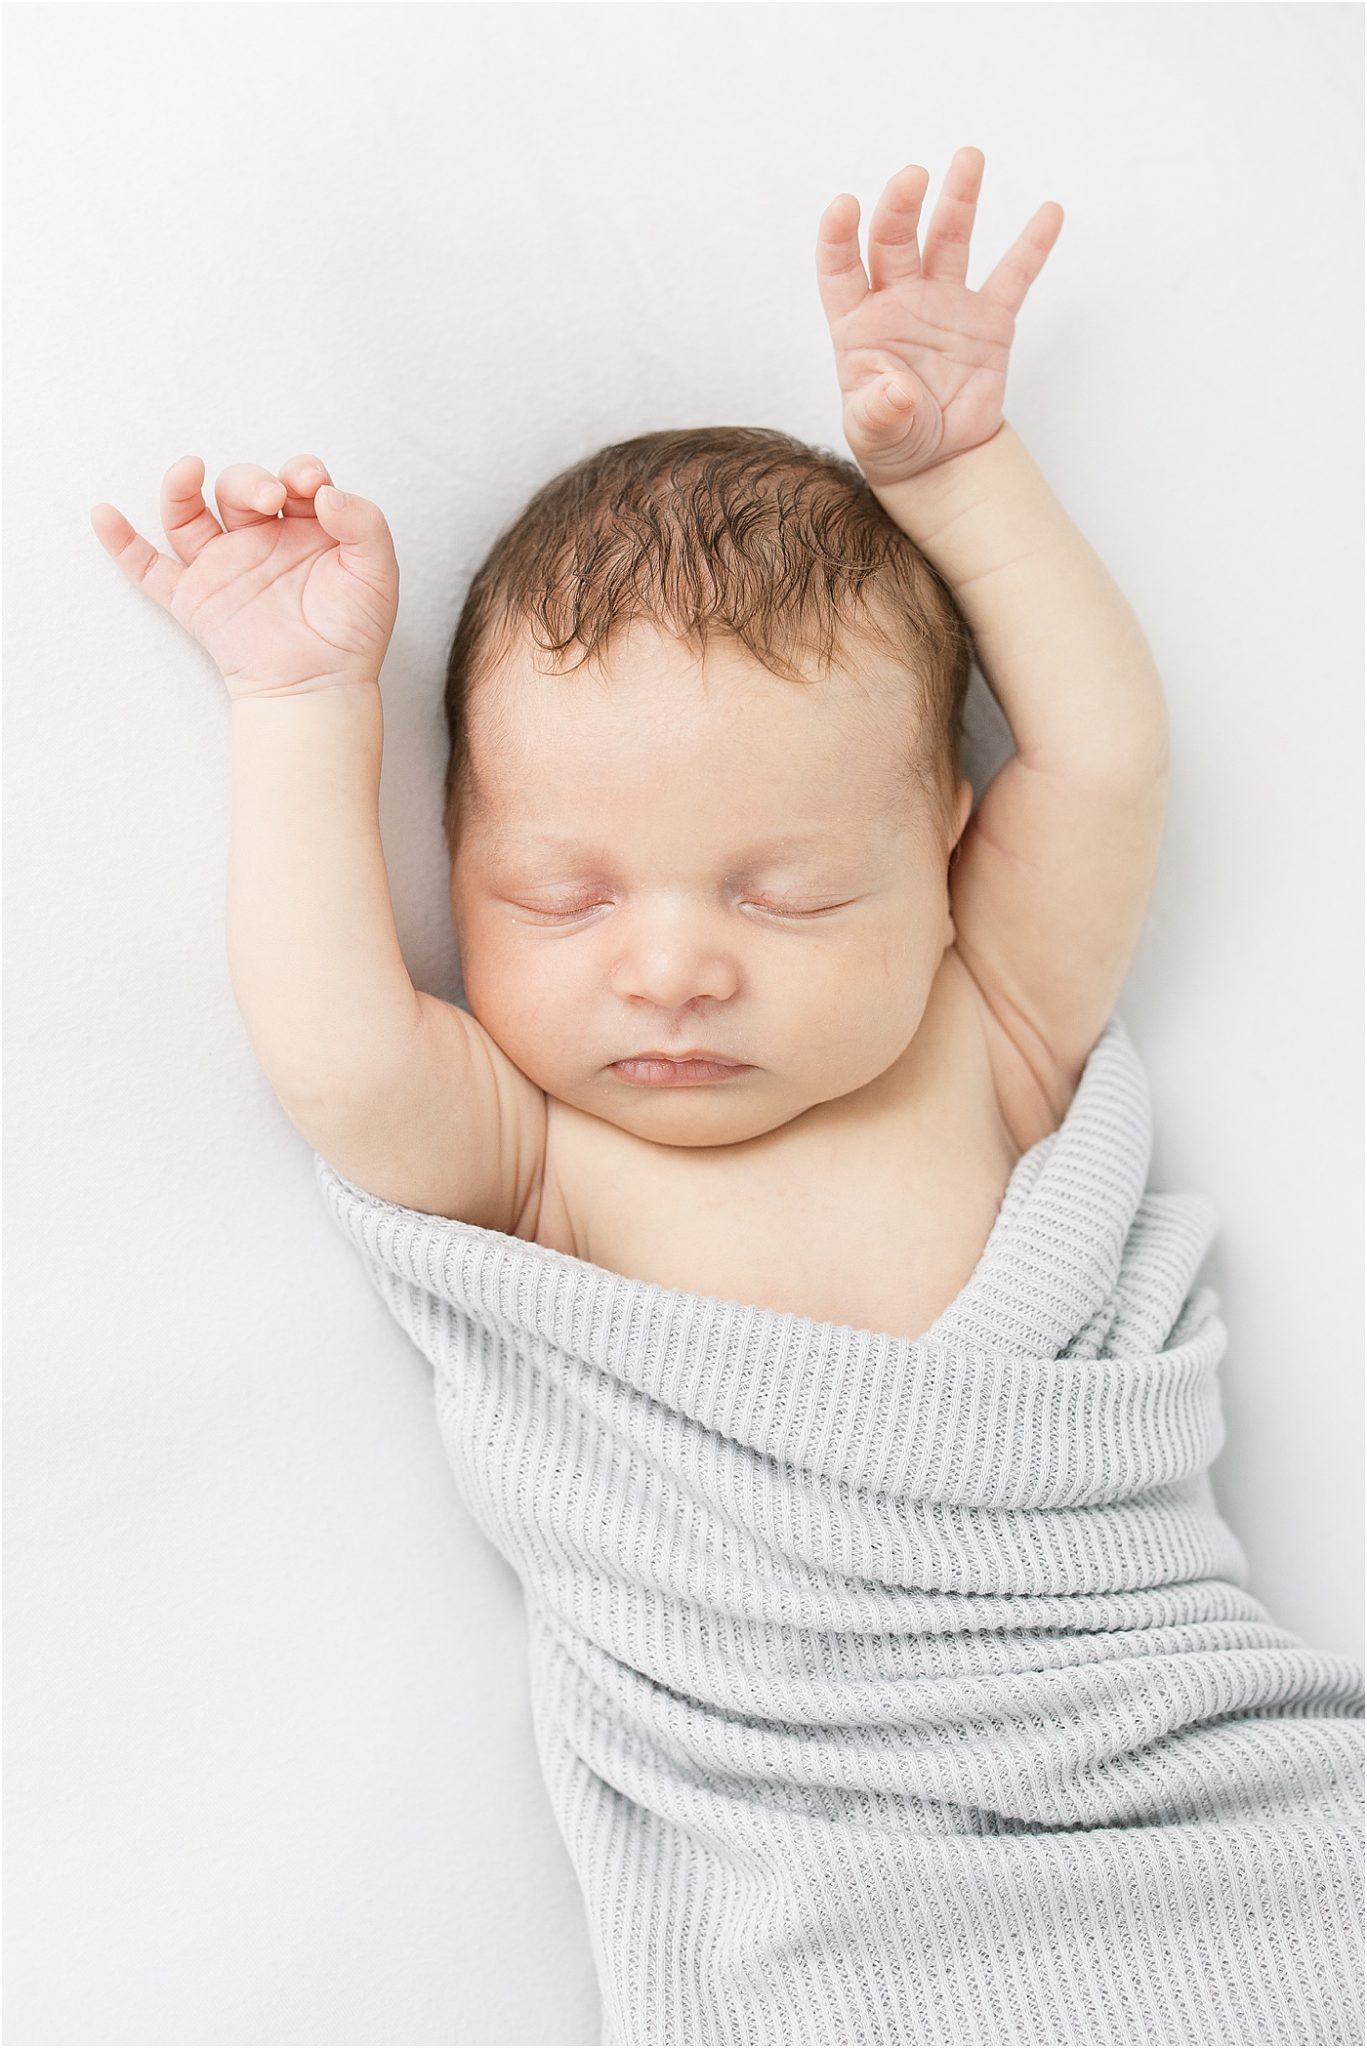 Baby boy newborn photo in Indianapolis.